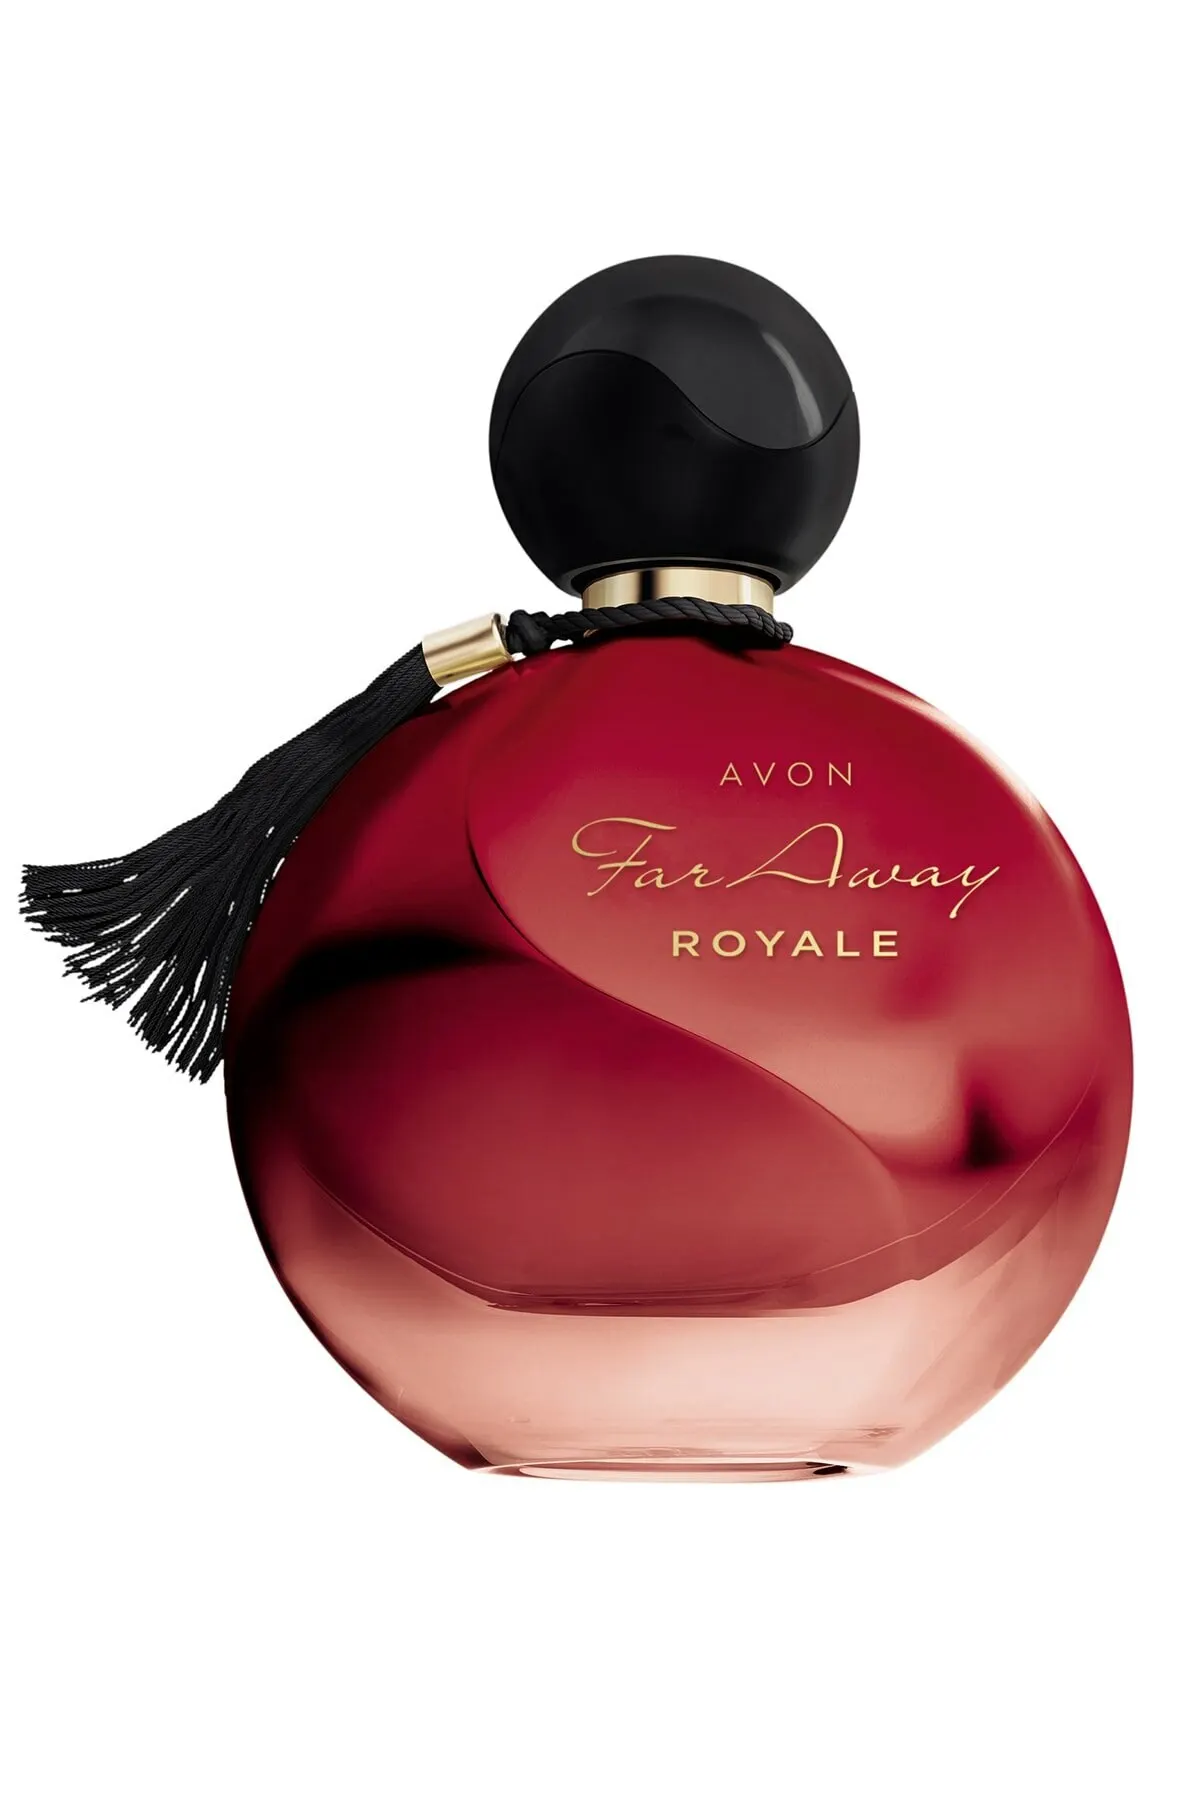 Avon Uzak Royale Kad Nlar For Perfume Edp Ml Original Perfume